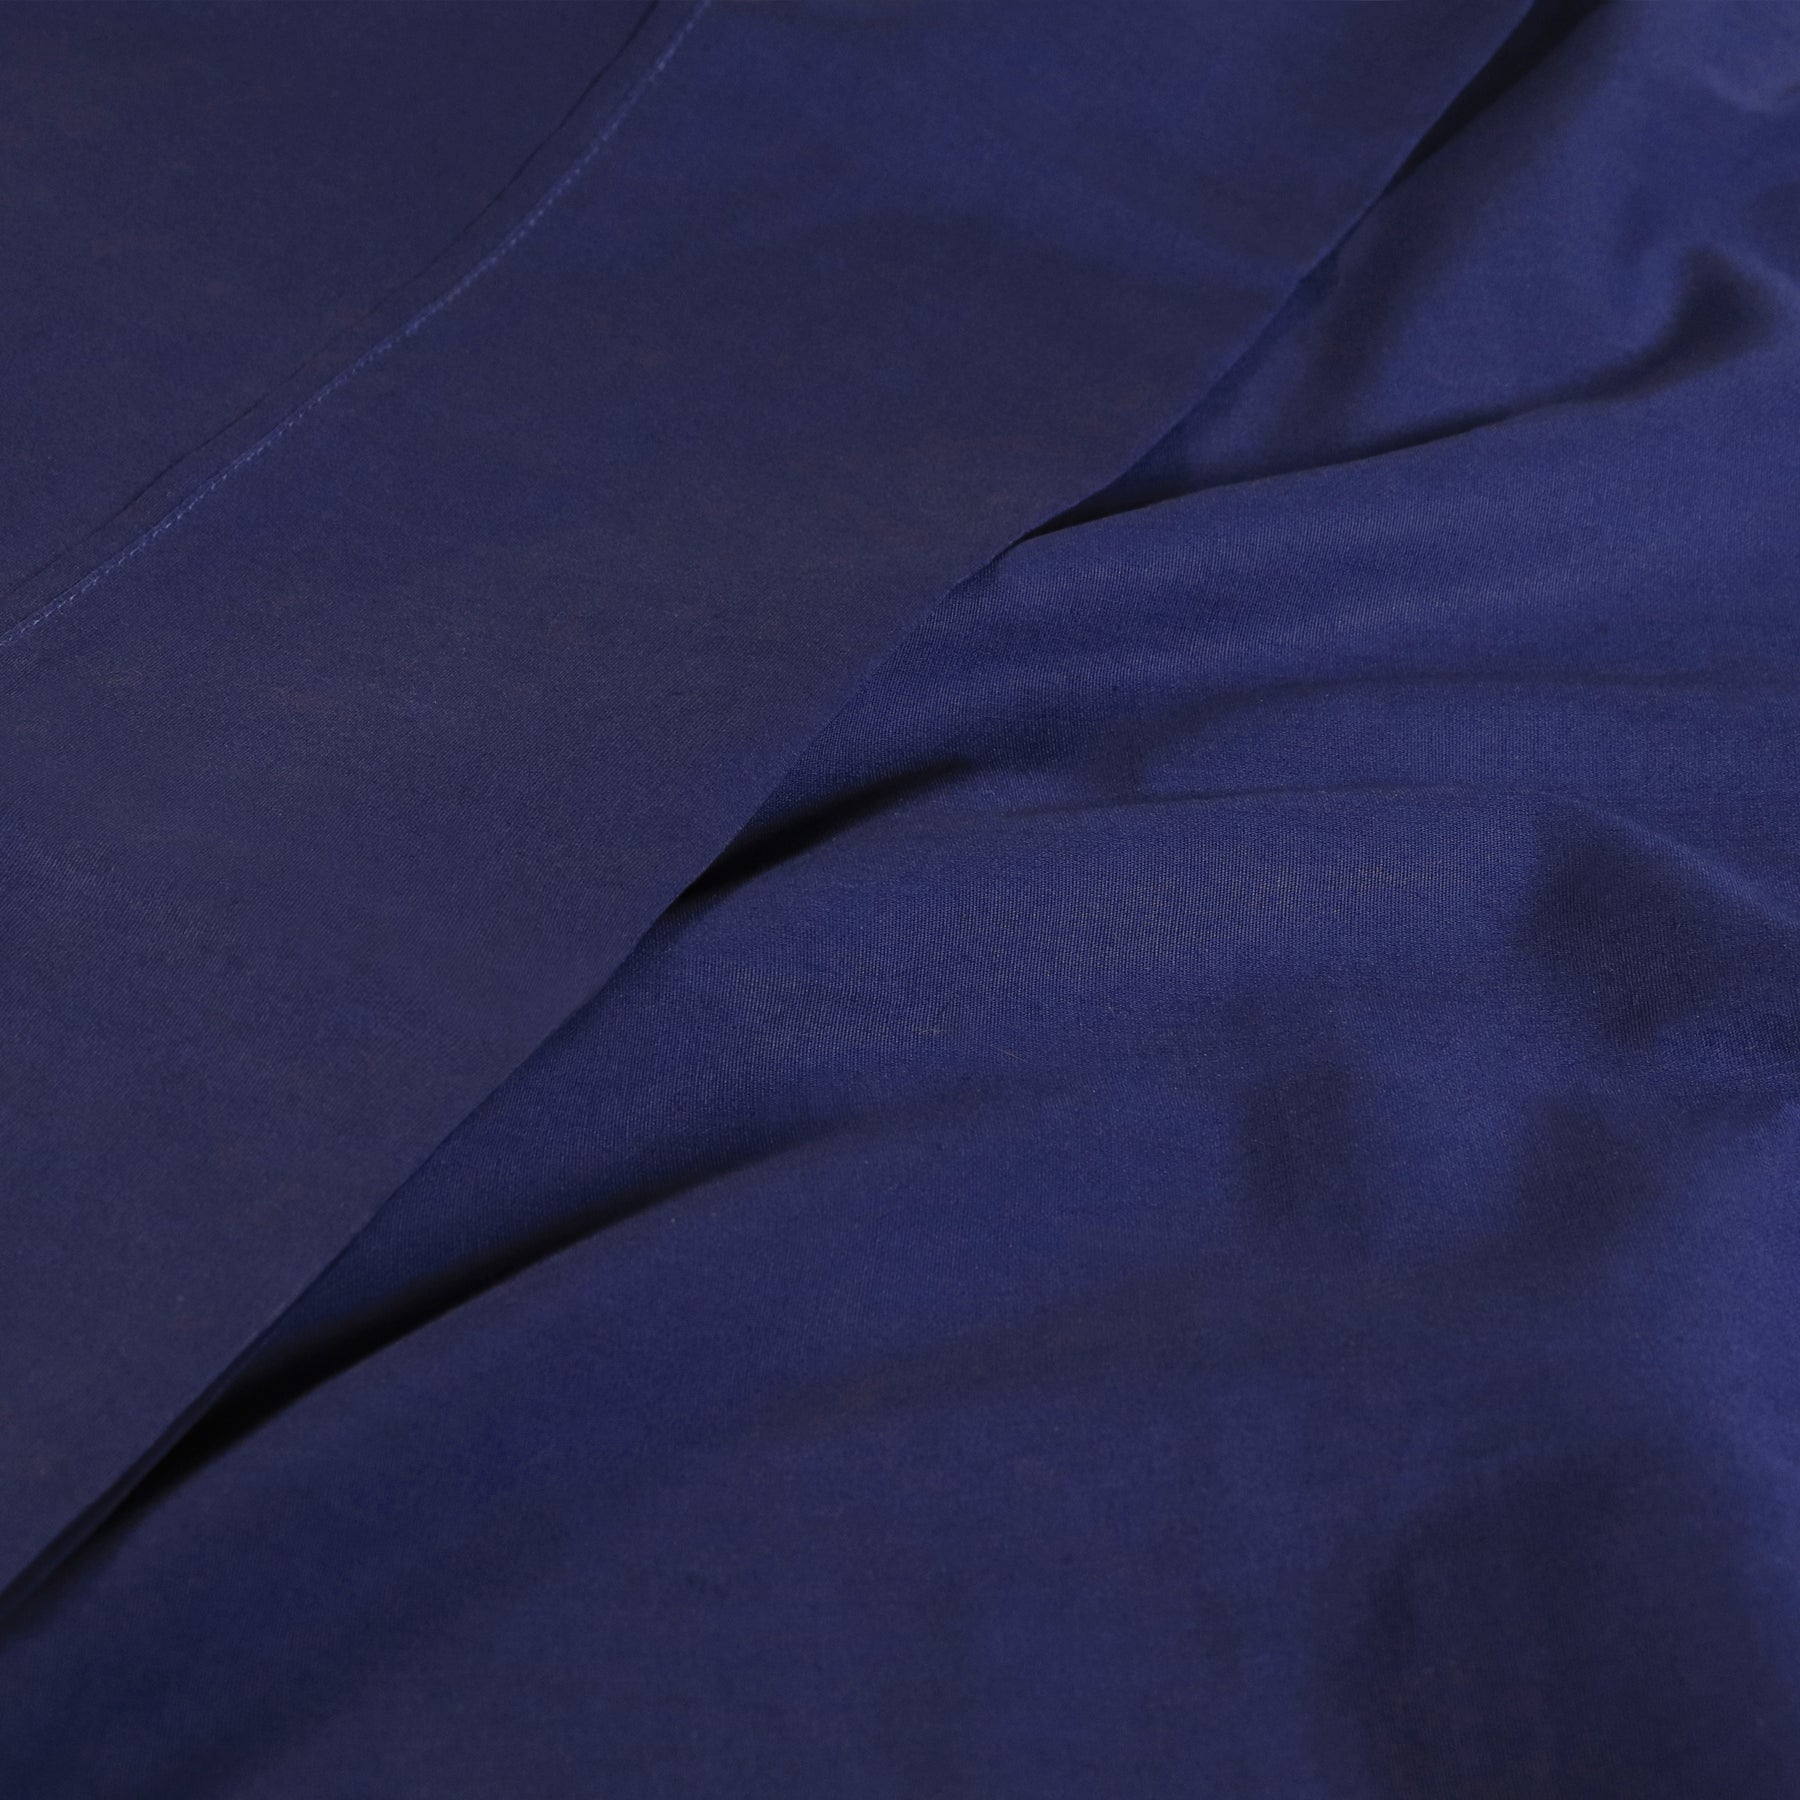 Superior 100% Cotton Percale 300 Thread Count Sheet Set - Crown Blue